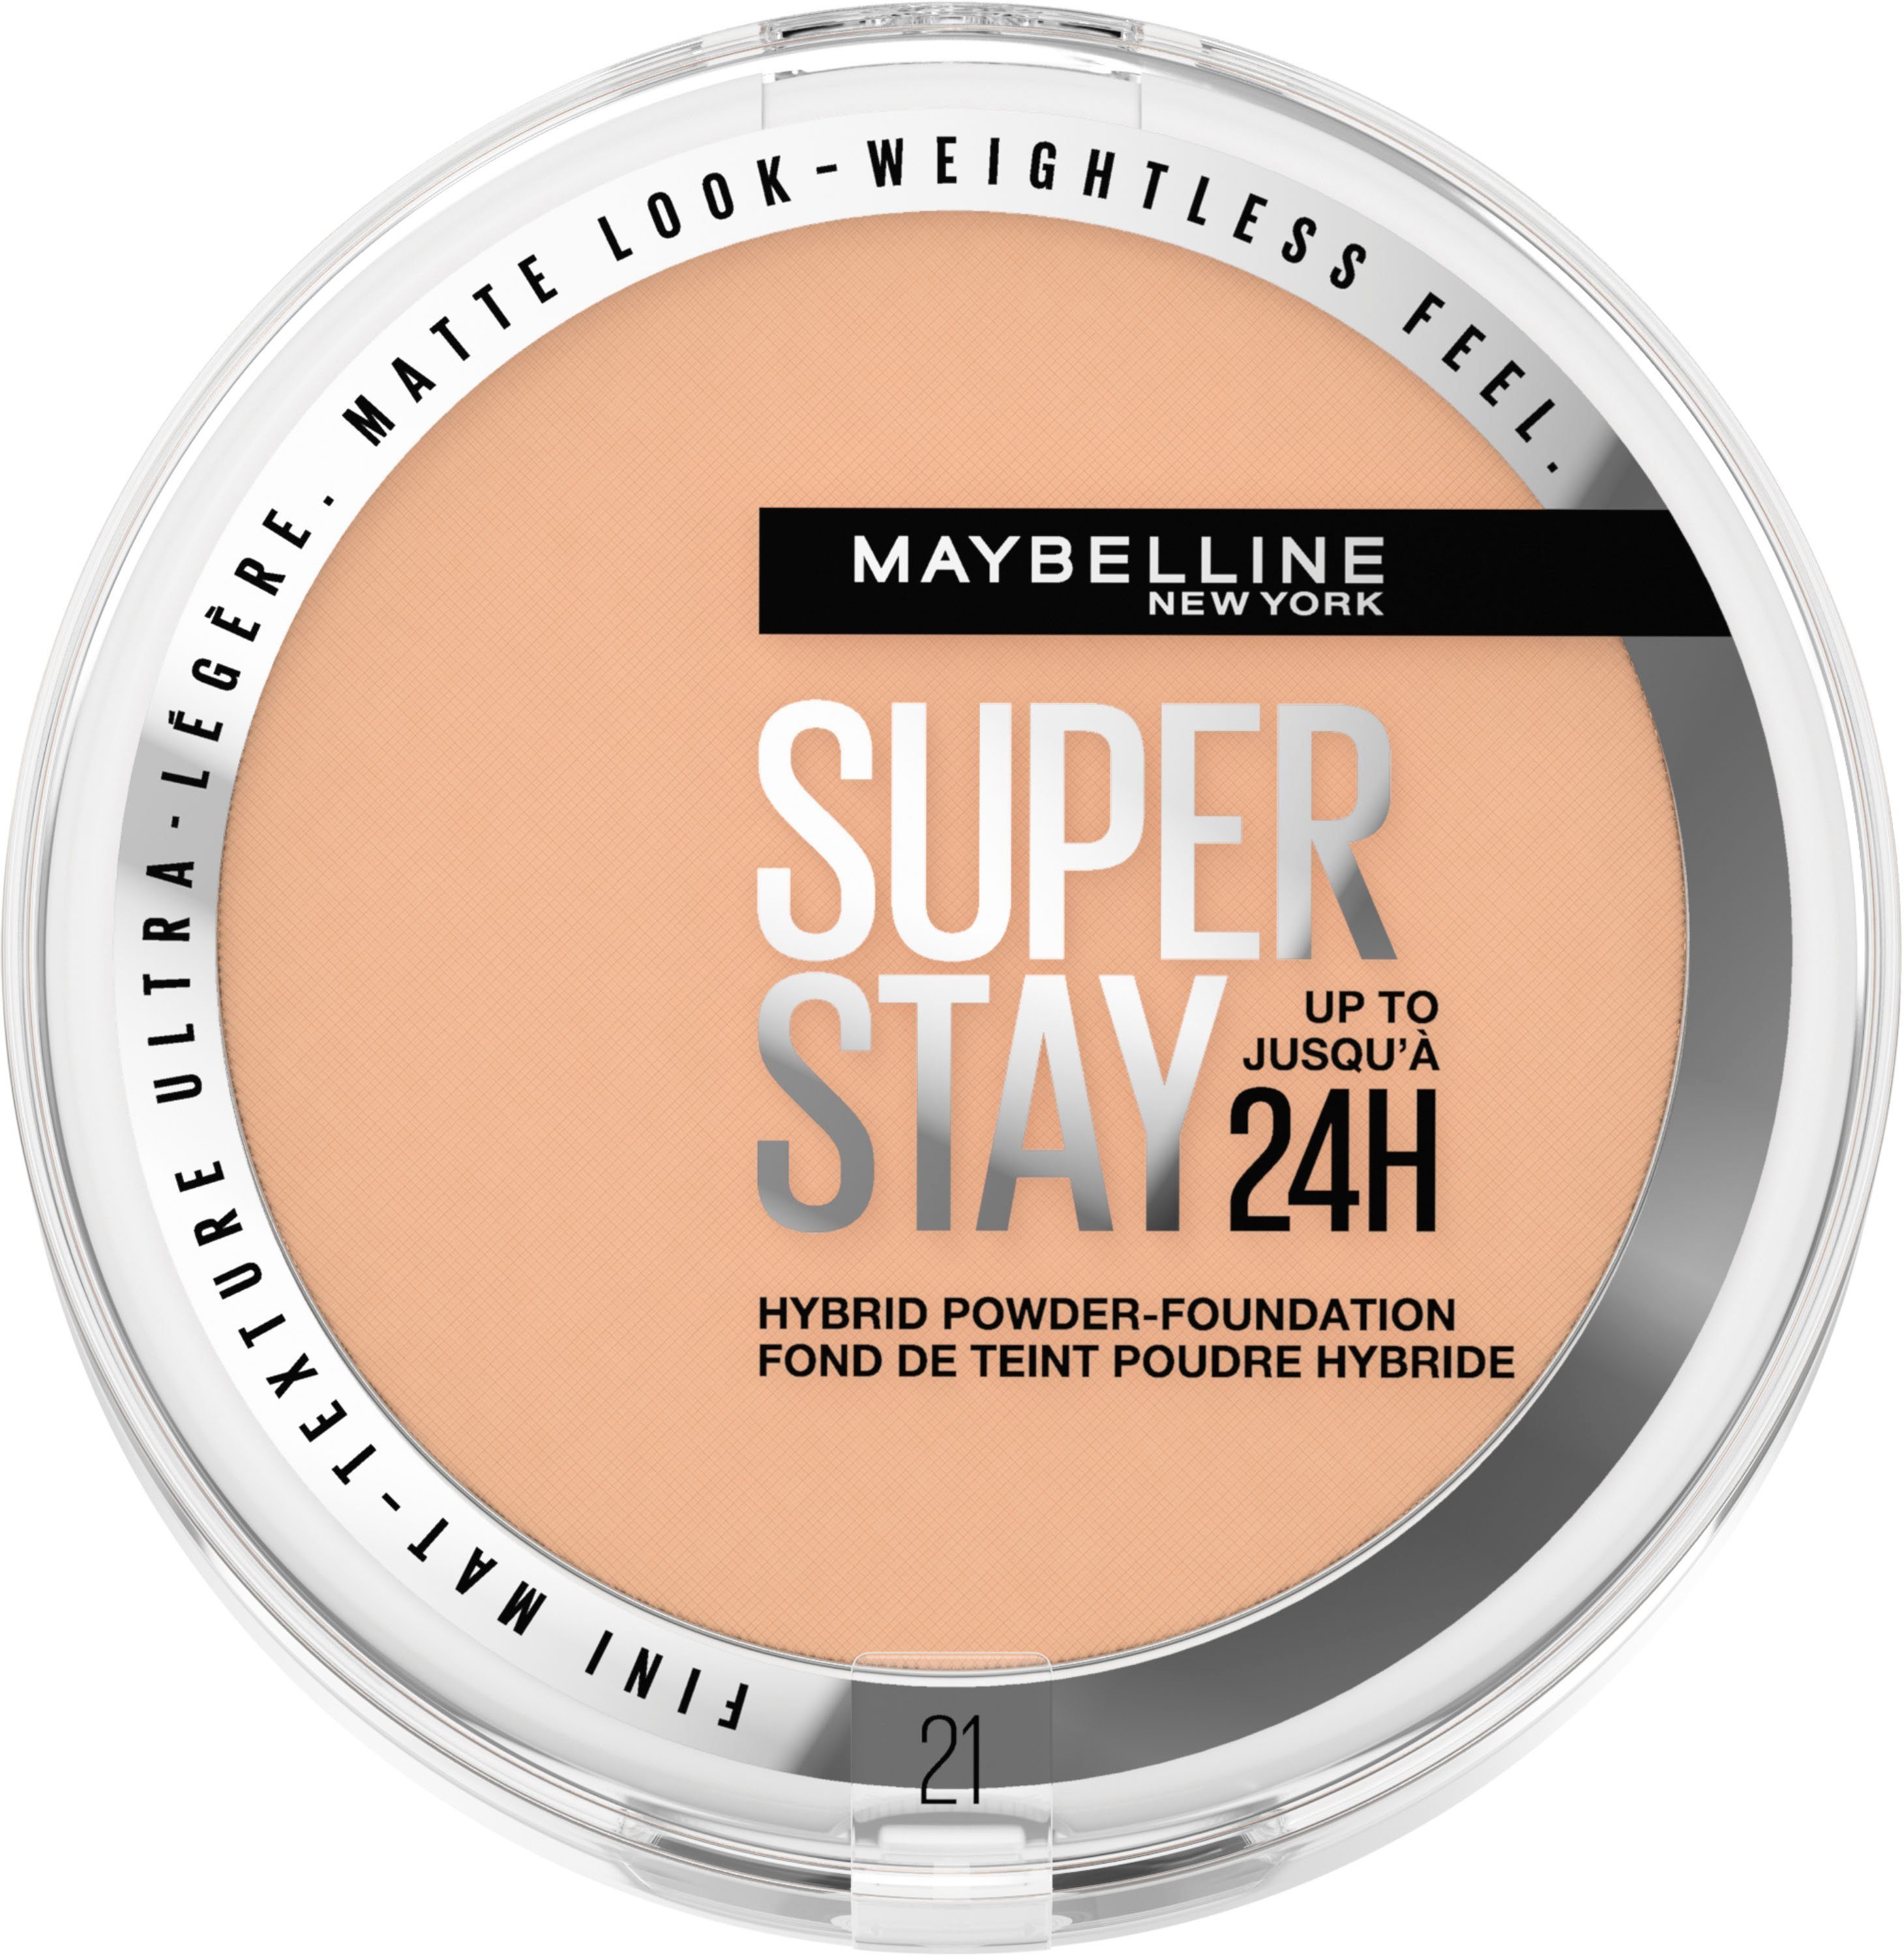 Make-Up YORK Maybelline Puder Hybrides Foundation Super NEW Stay New MAYBELLINE York